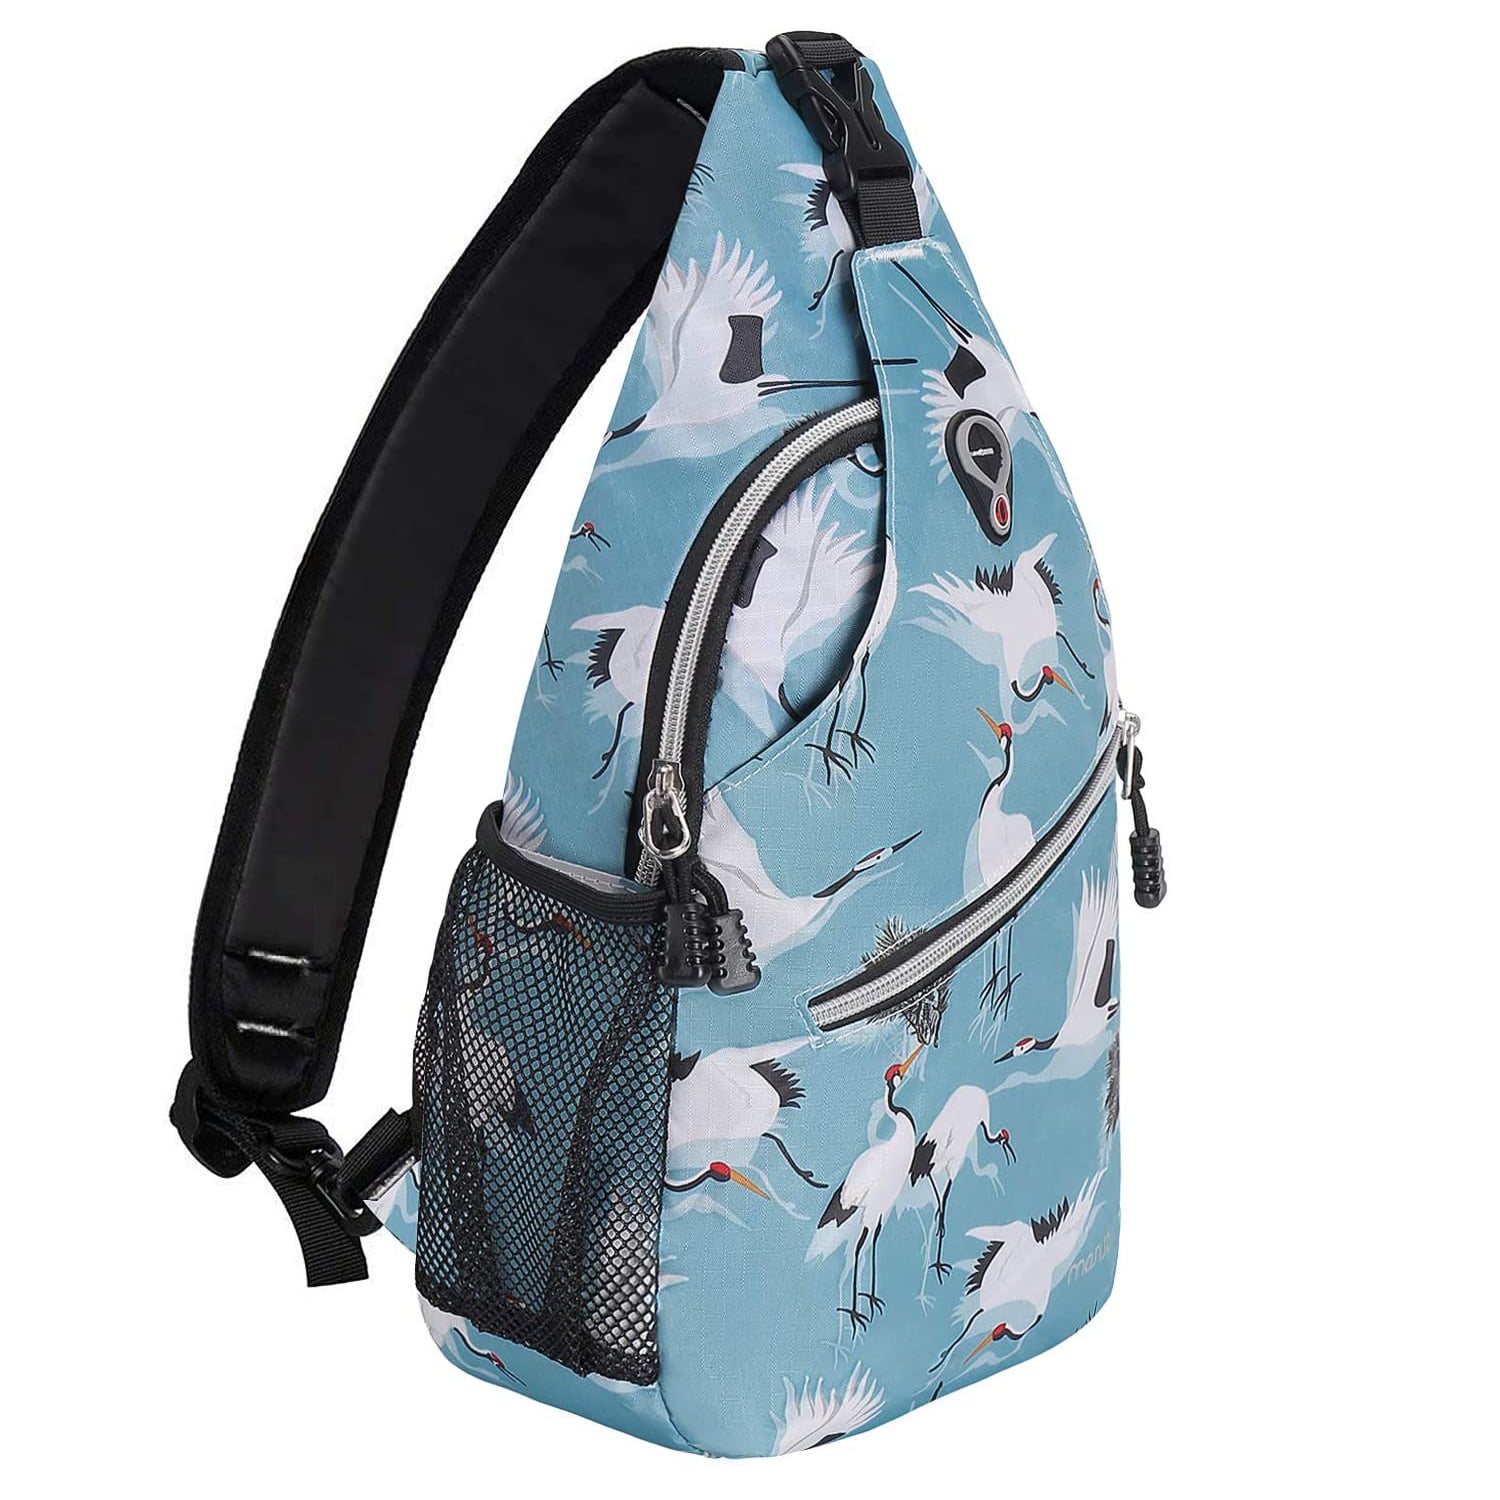 Oil Painting Paris Eiffel Tower Lover Backpack Fashion Laptop Daypack Travel Backpack for Women Men Girl Boy Schoolbag College School Bag 